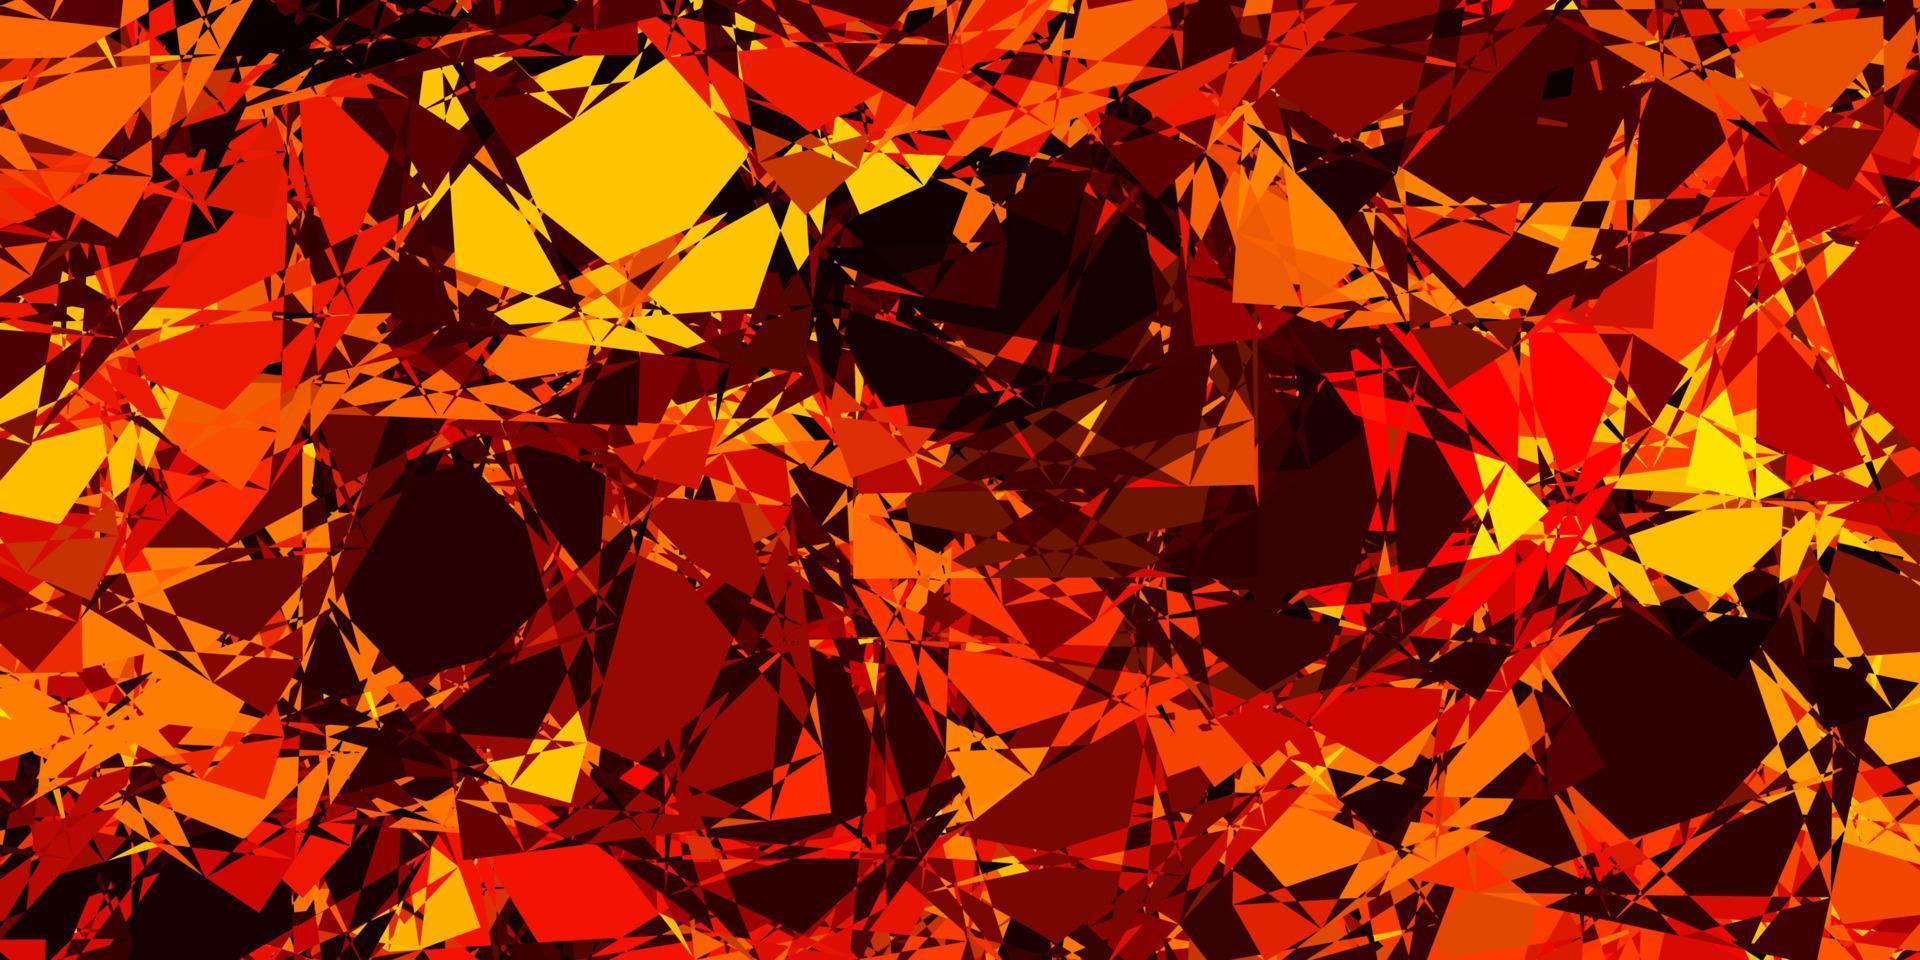 Dark Orange vector pattern with polygonal shapes.